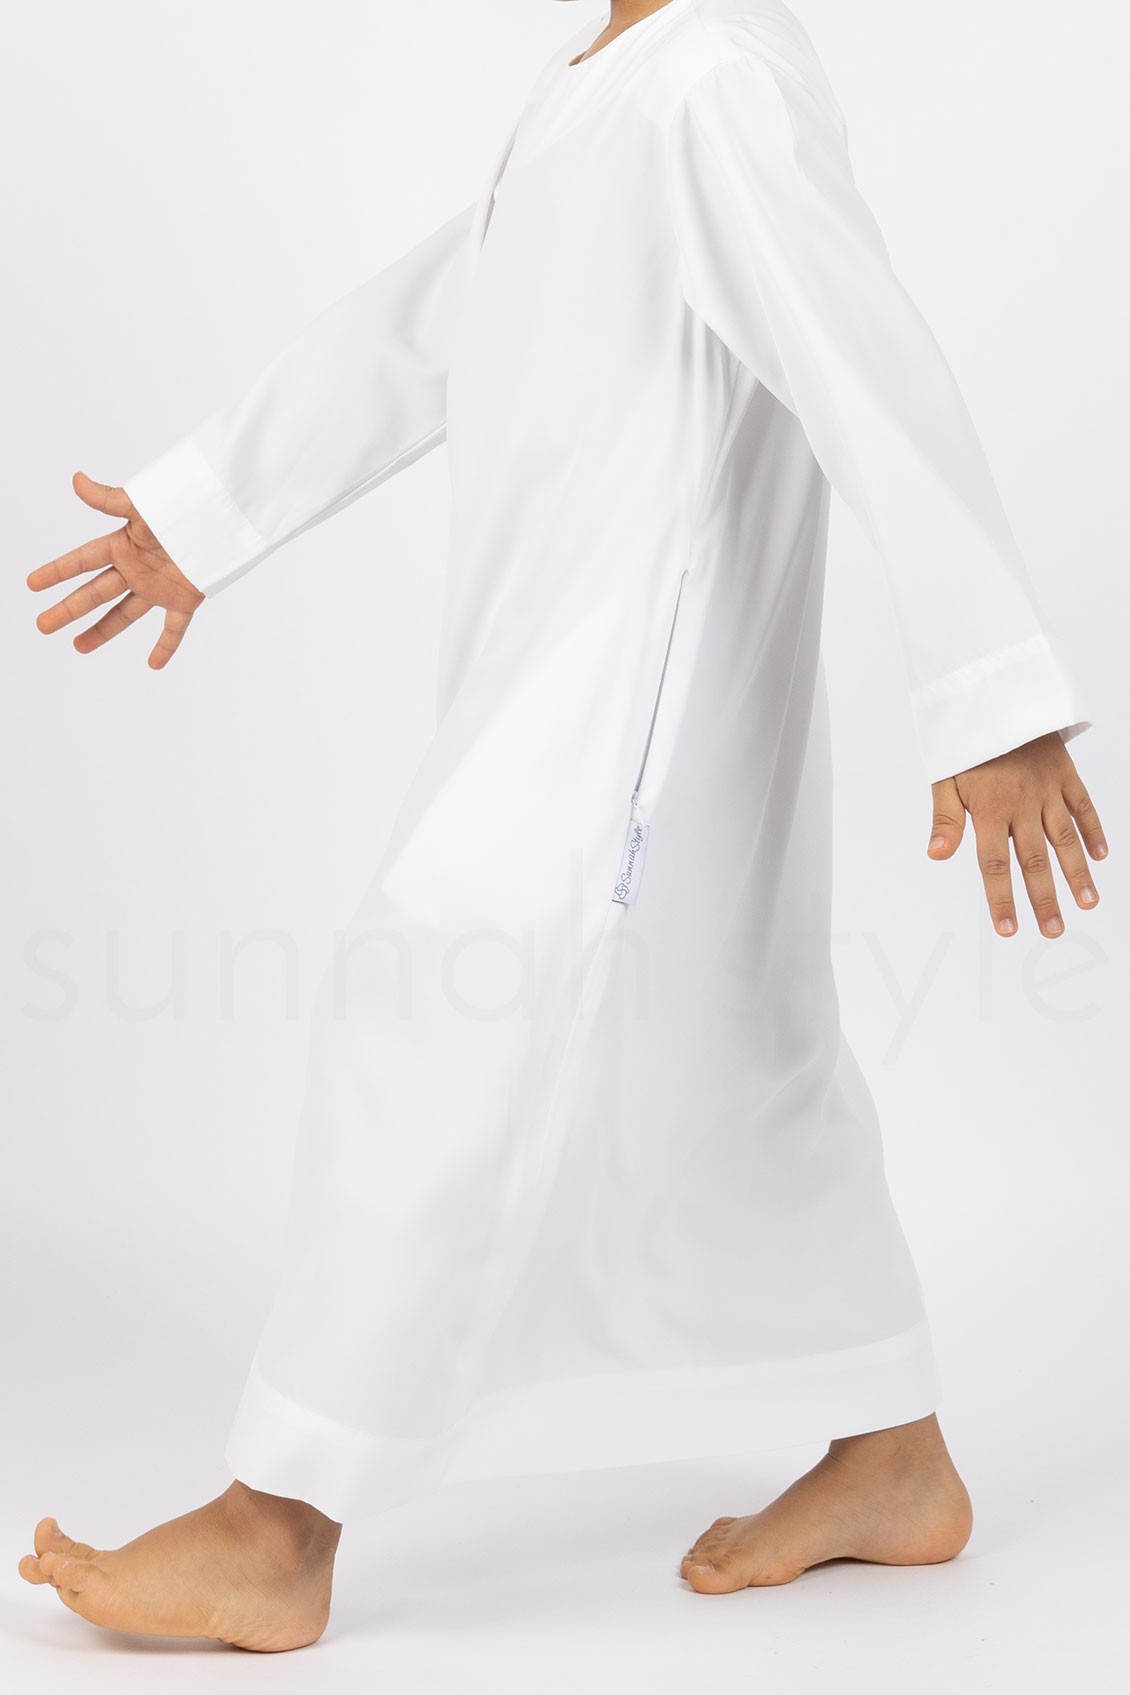 Sunnah Style Boys Shoulder Snap Thobe Creamy White Kids Child Jubbah